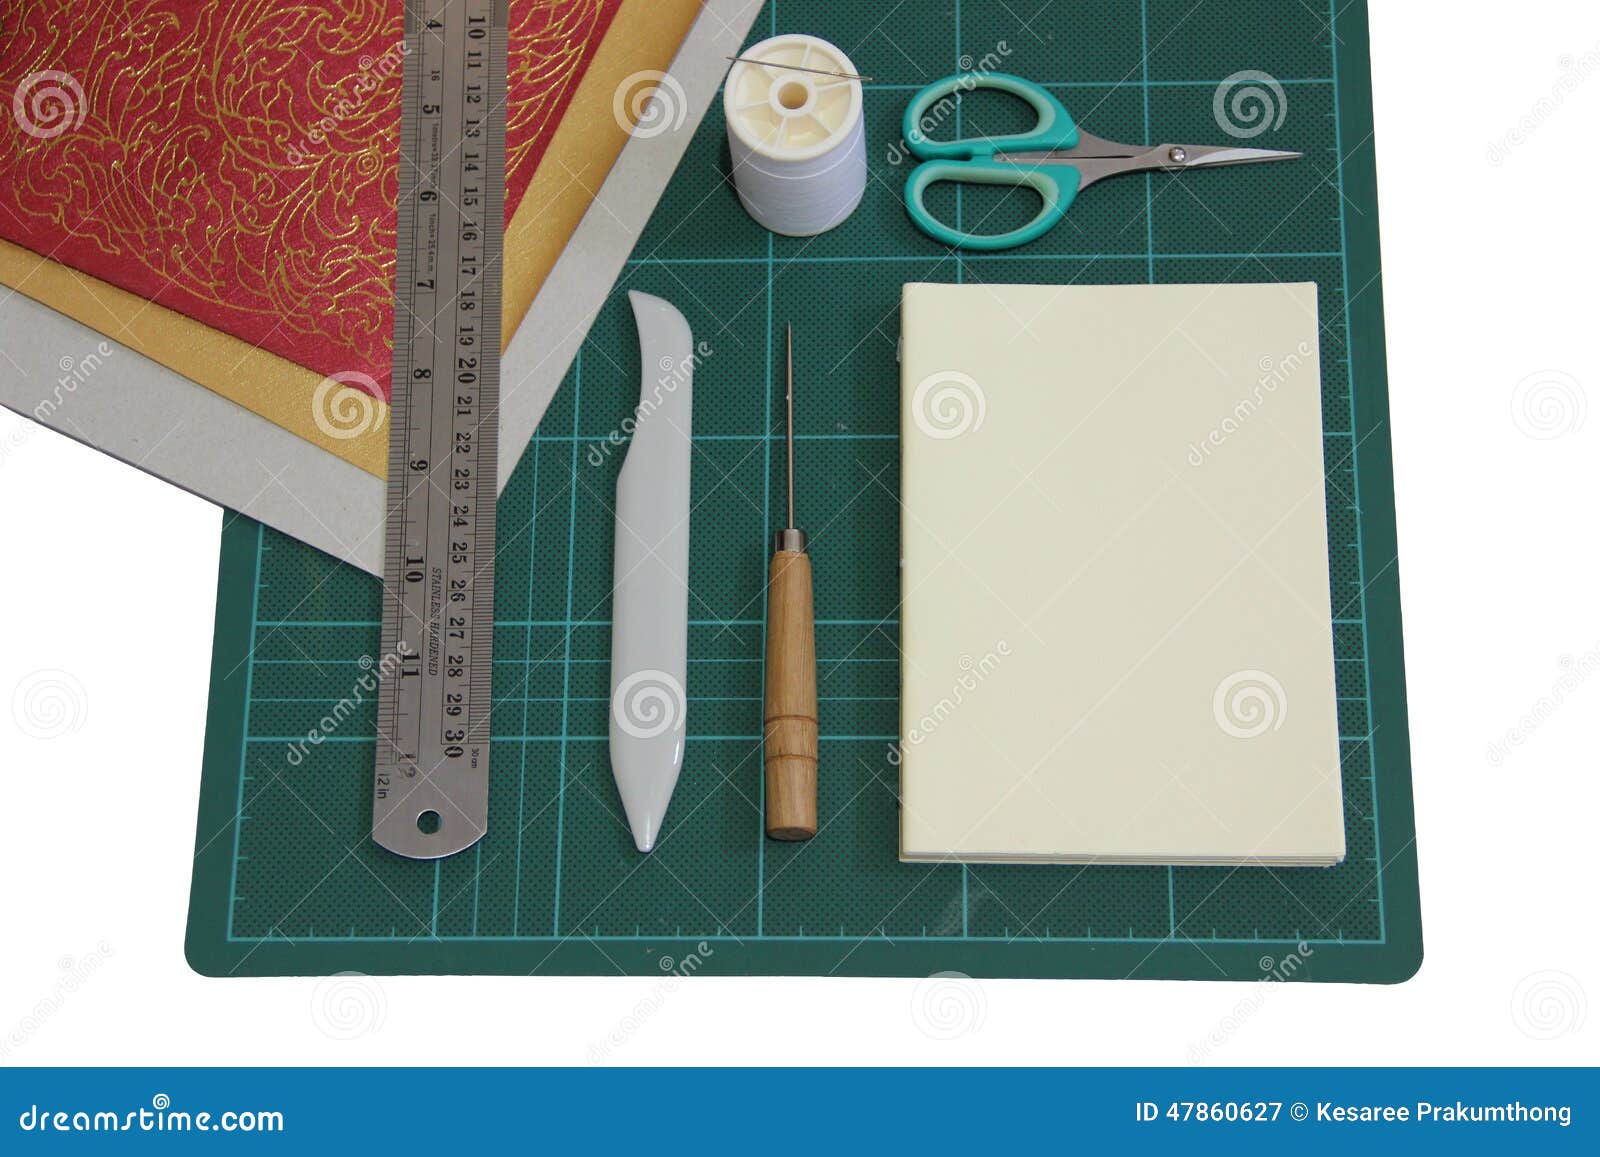 Hard Cover Book Binding Materials Stock Image - Image of textblock